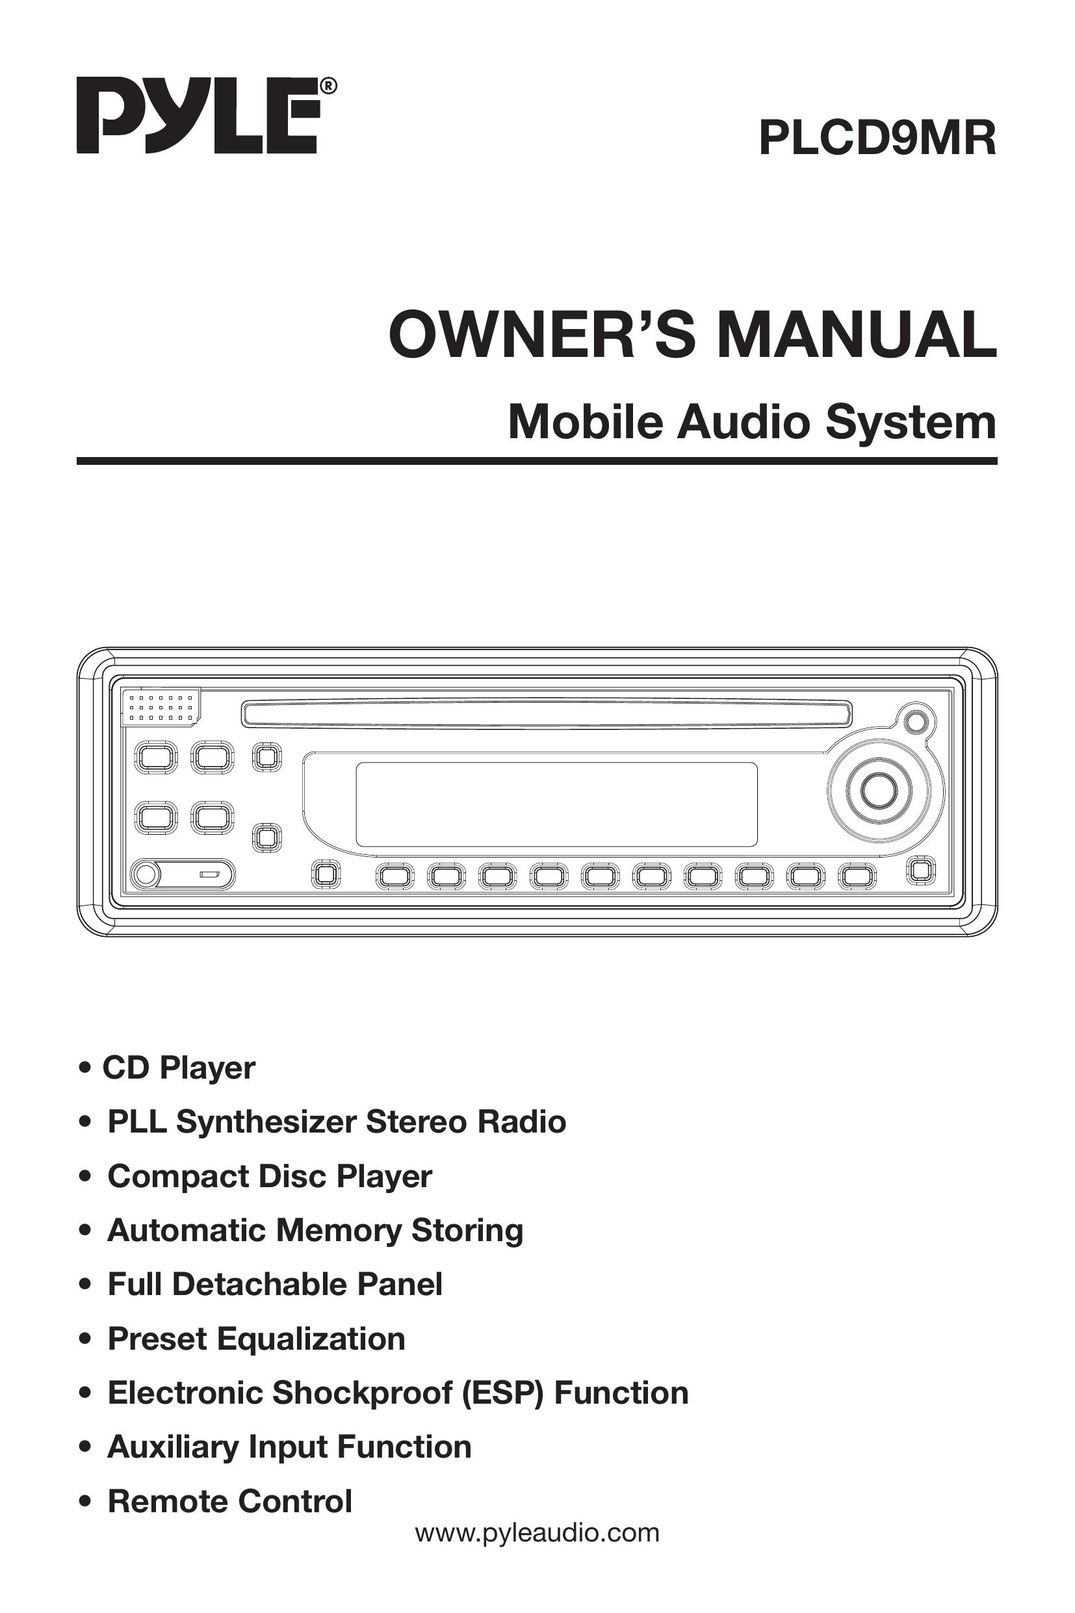 Radio Shack PLCD9MR Car Stereo System User Manual